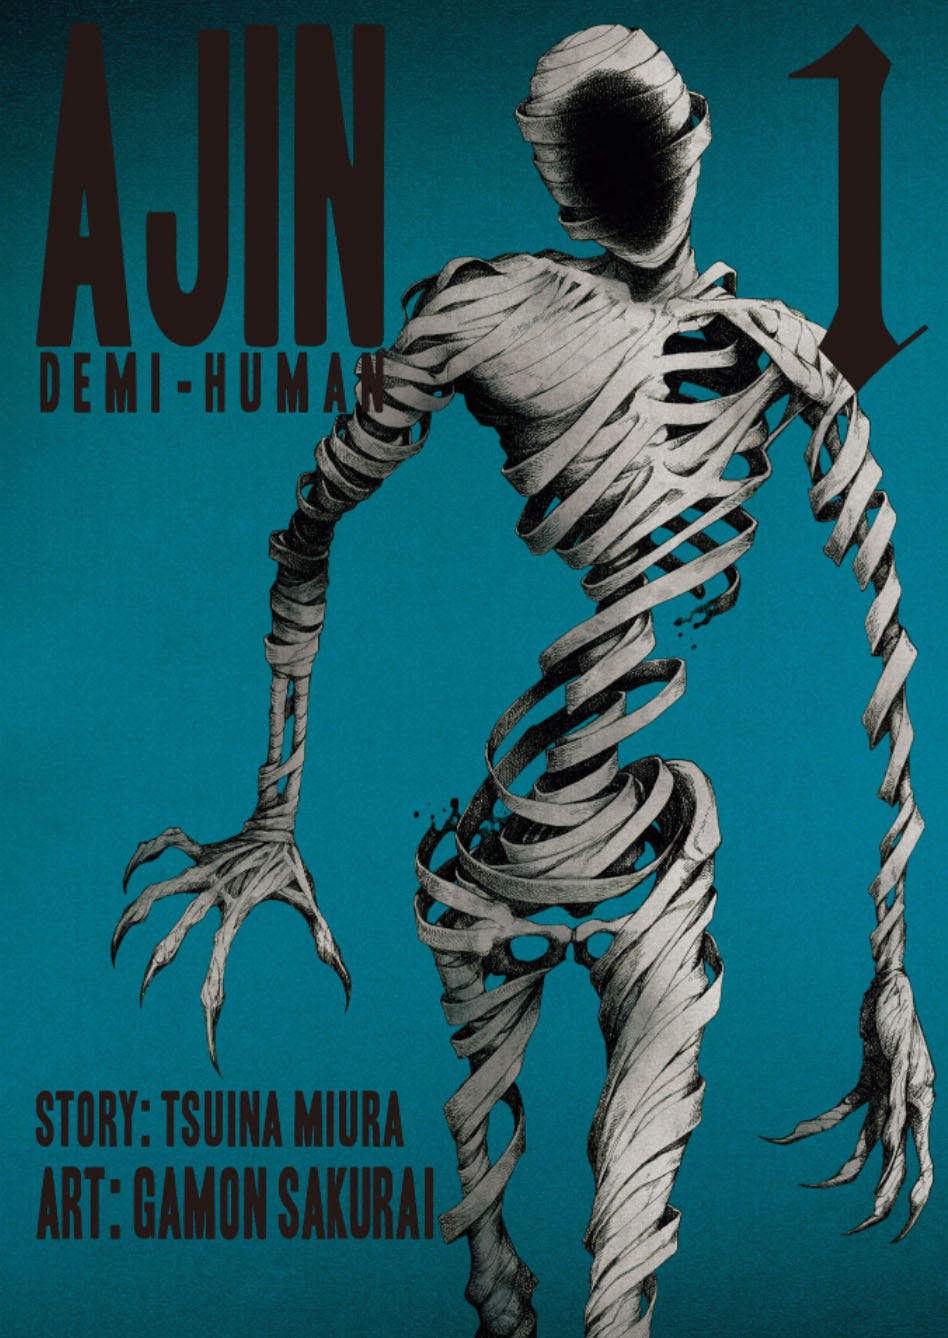 PODCAST - Episode 57: AJIN: Demi-Human vol. 1 by Gamon Sakurai and Tsuina  Miura